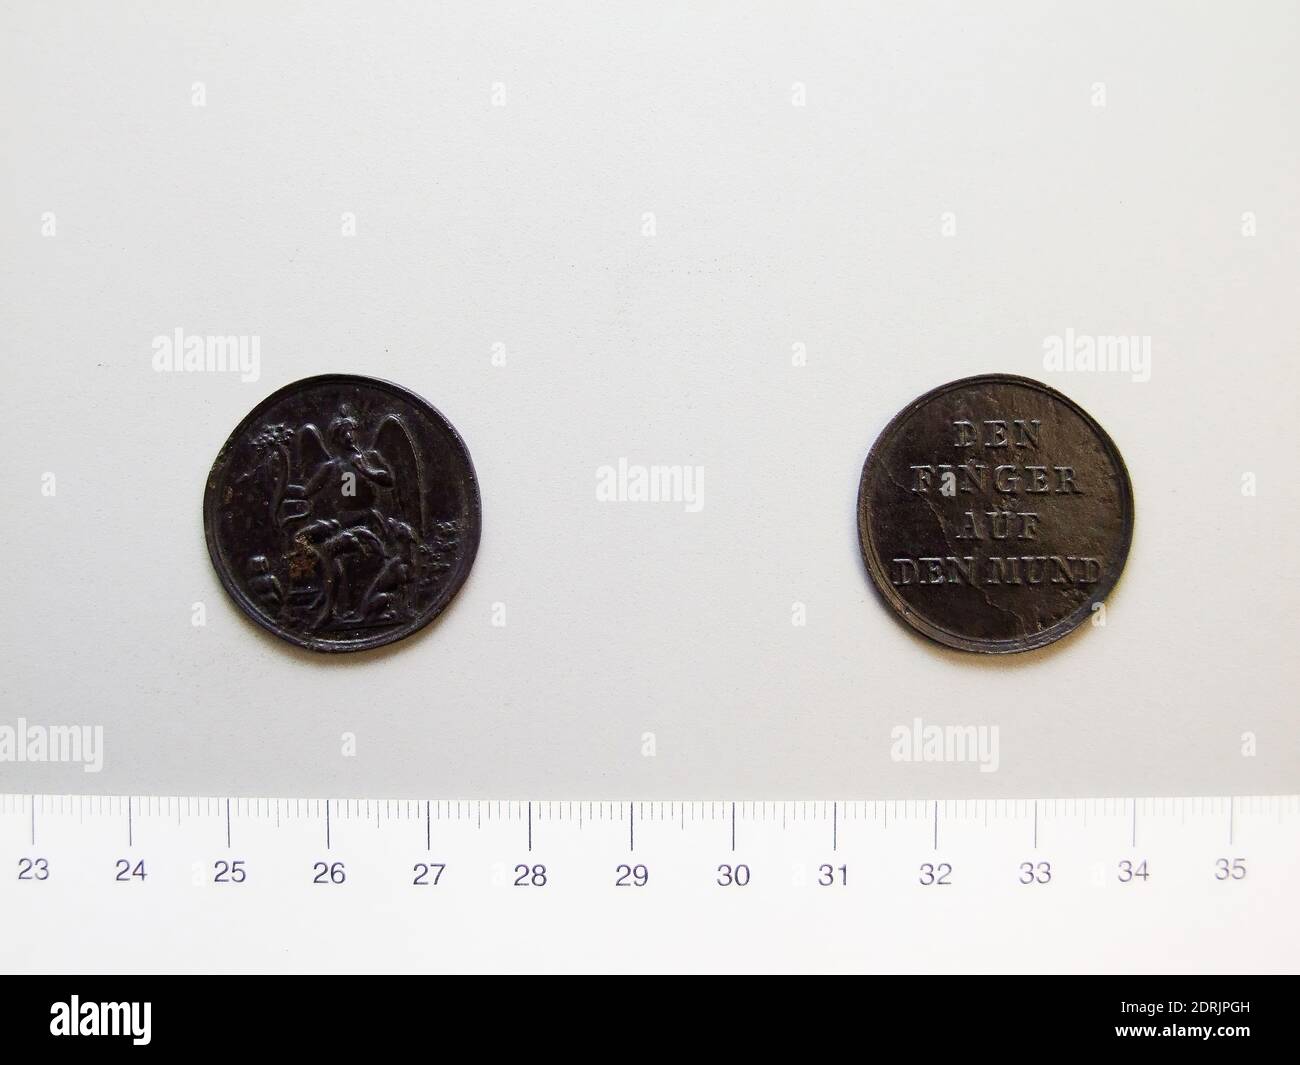 Copper Medal of Den Finger auf Den Mund, Copper, 4.45 g, 12:00, 27.5 mm, Made in Germany, German, 18th–20th century, Numismatics Stock Photo